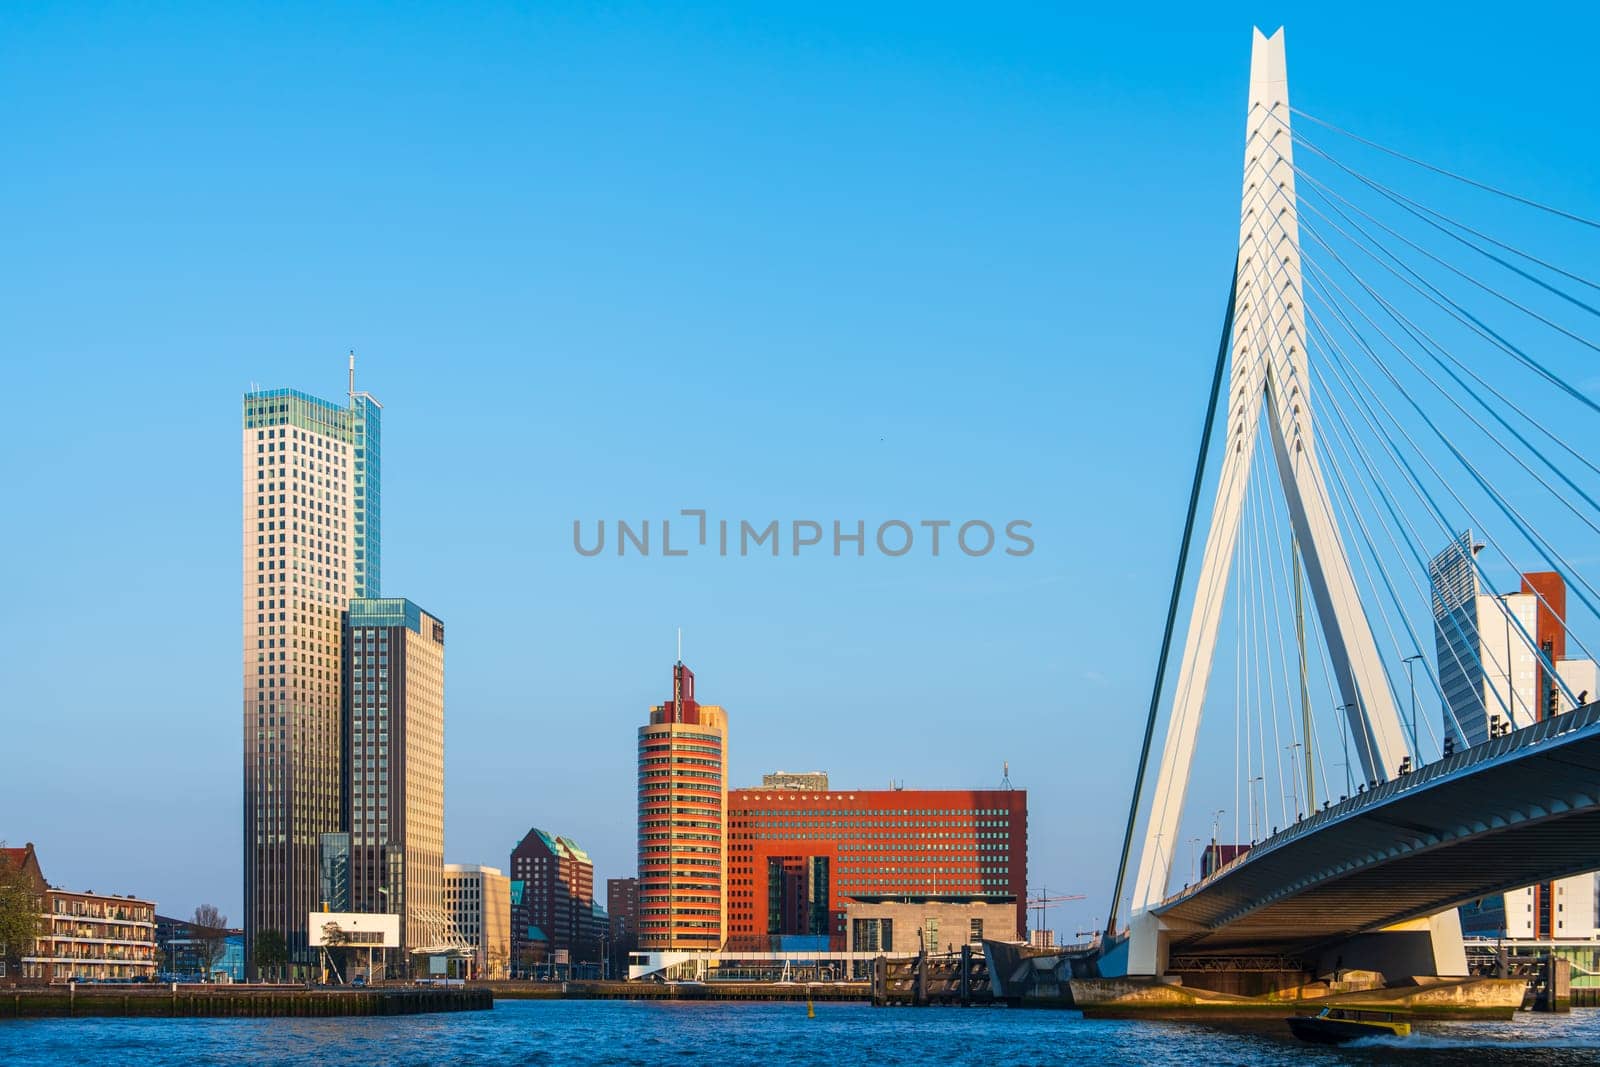 Rotterdam. Spectacular Skylines, Captivating Beauty of Rotterdam's City Center Revealed. by PhotoTime